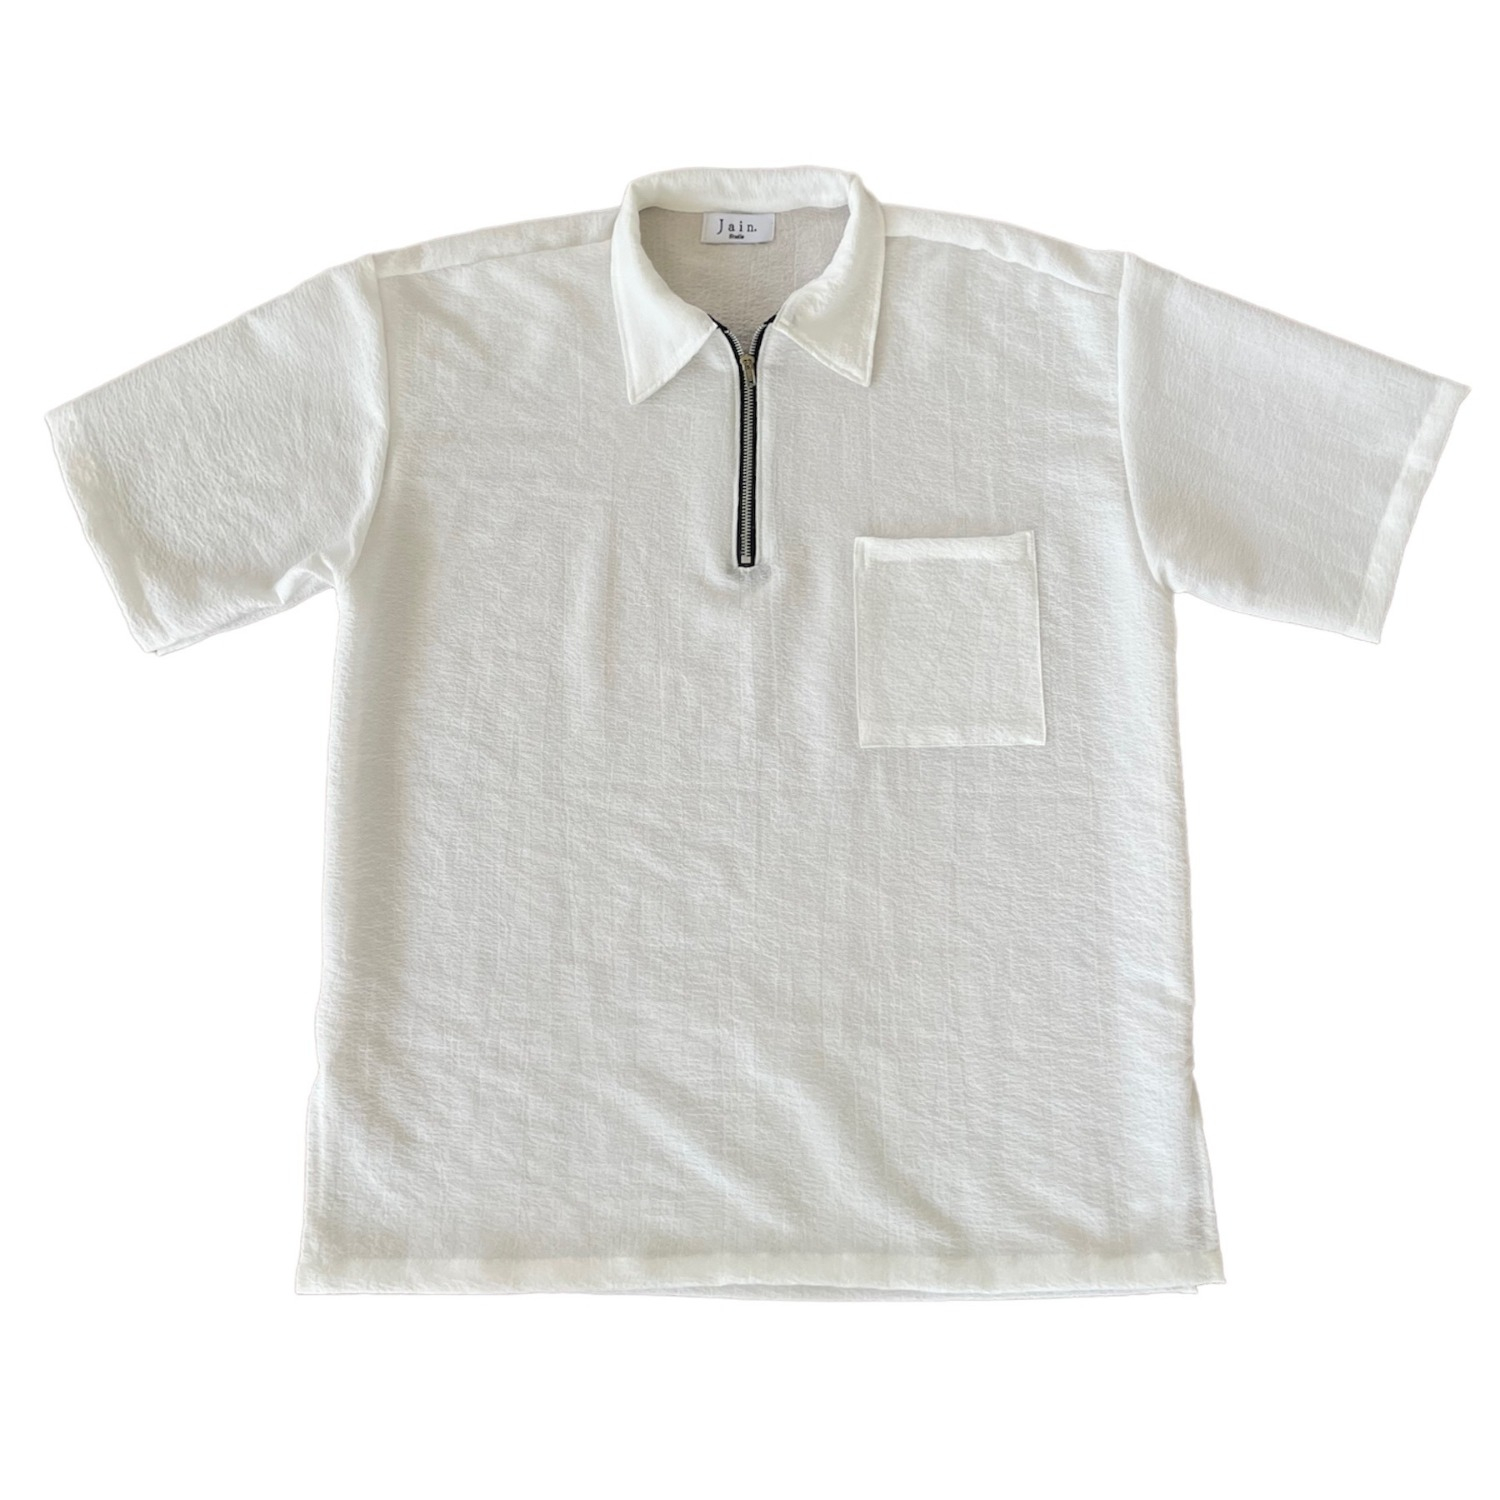 Tora shirt (White)